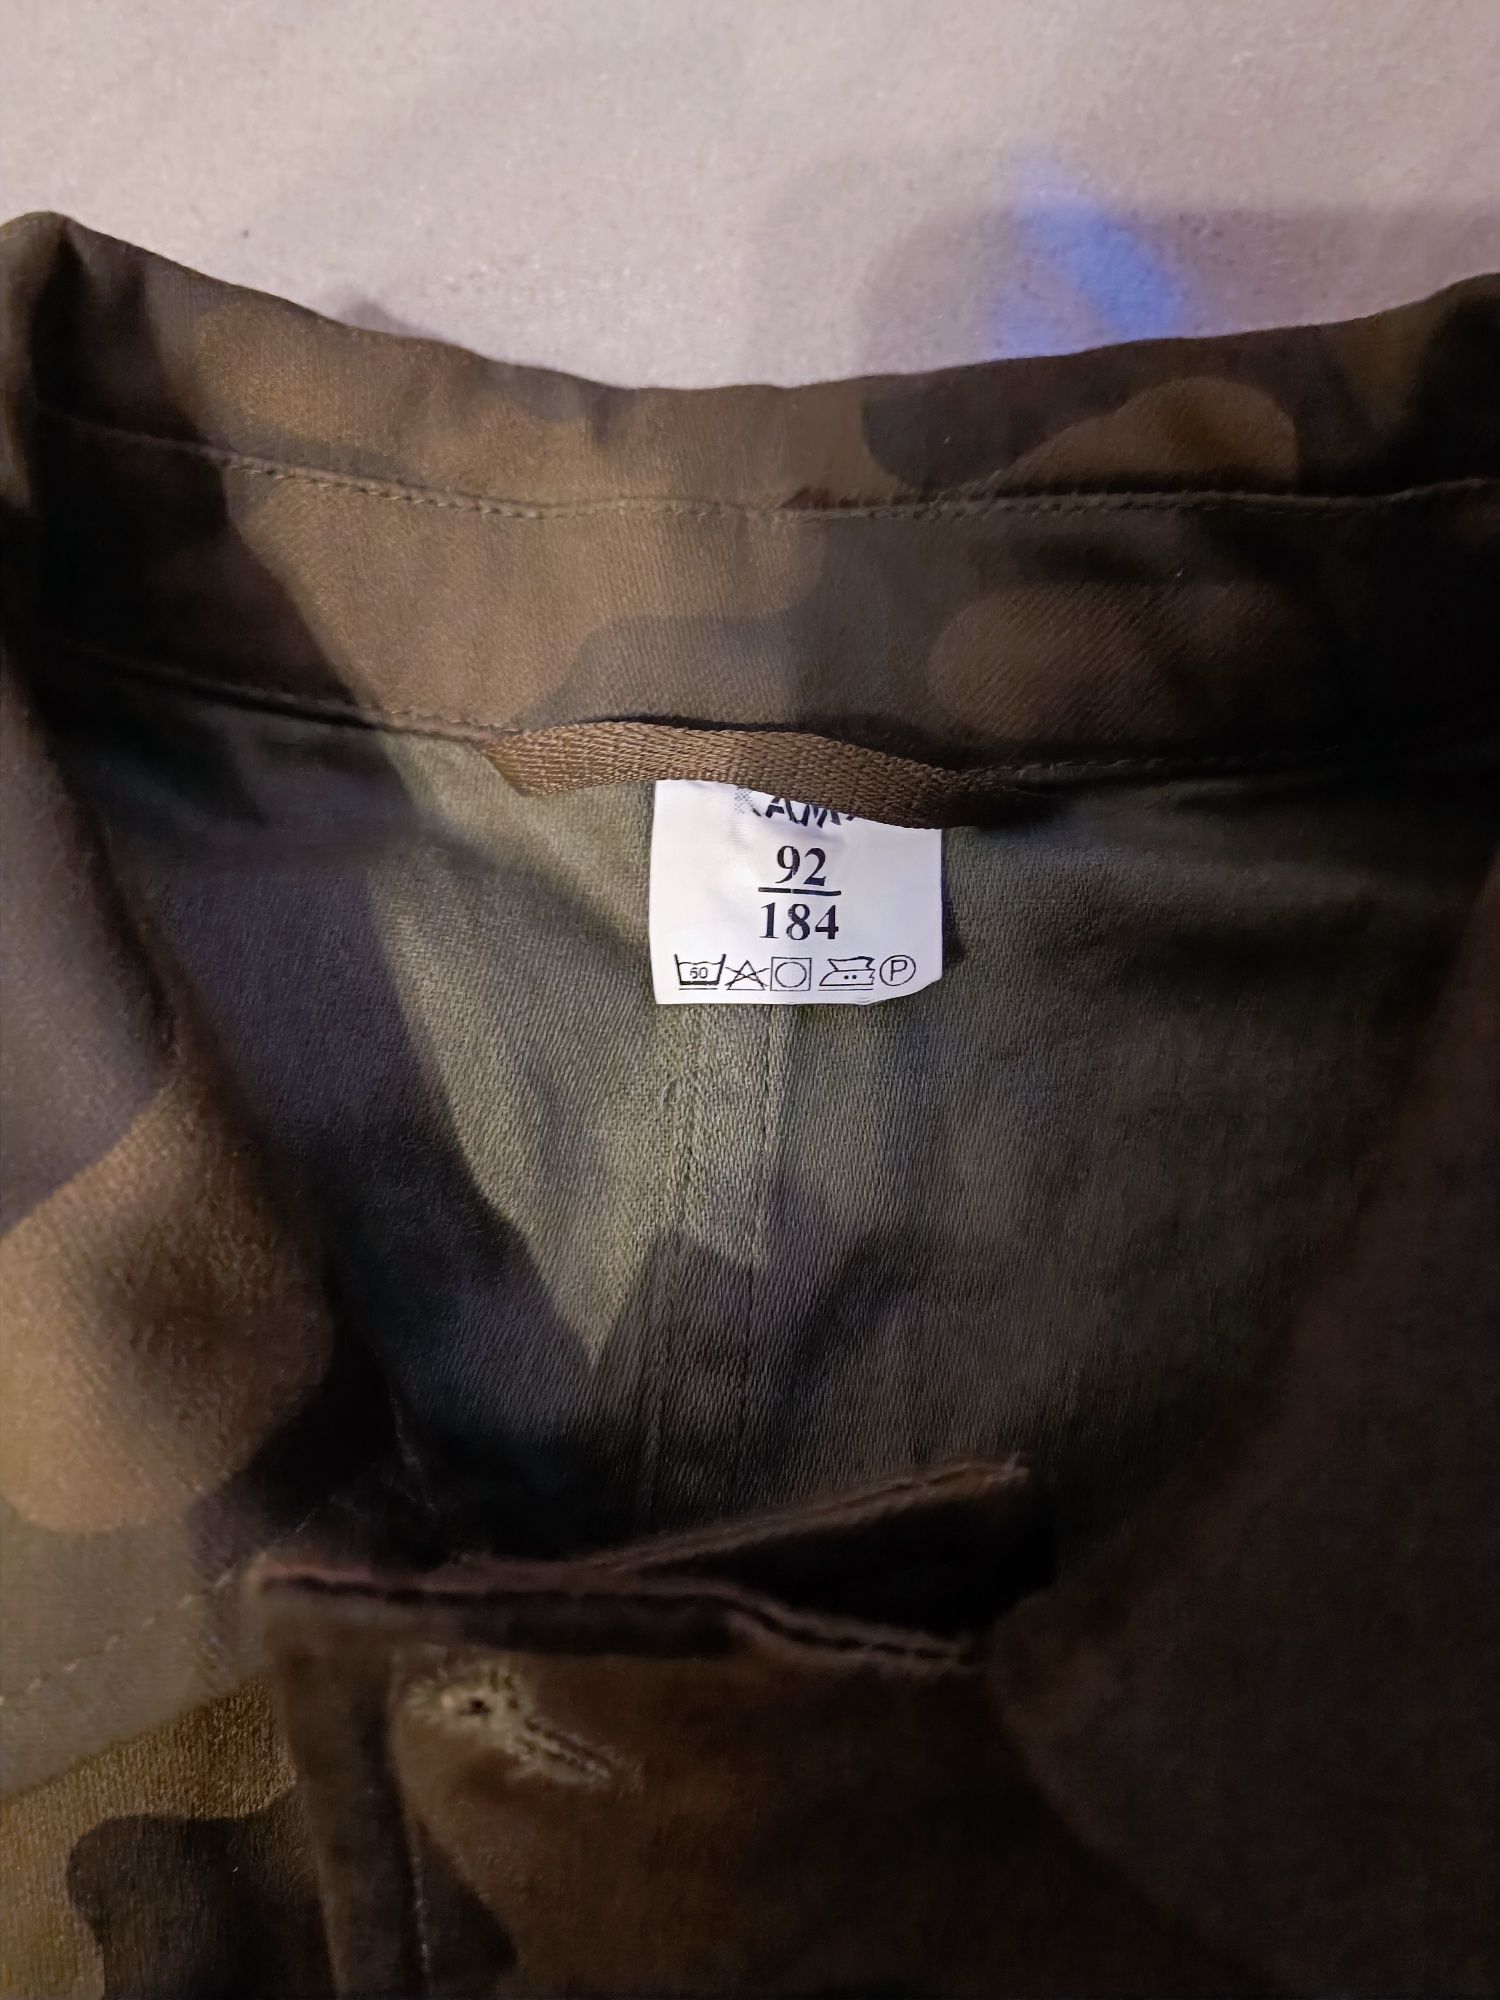 Bluza wojskowa Kama 92 184 mundur